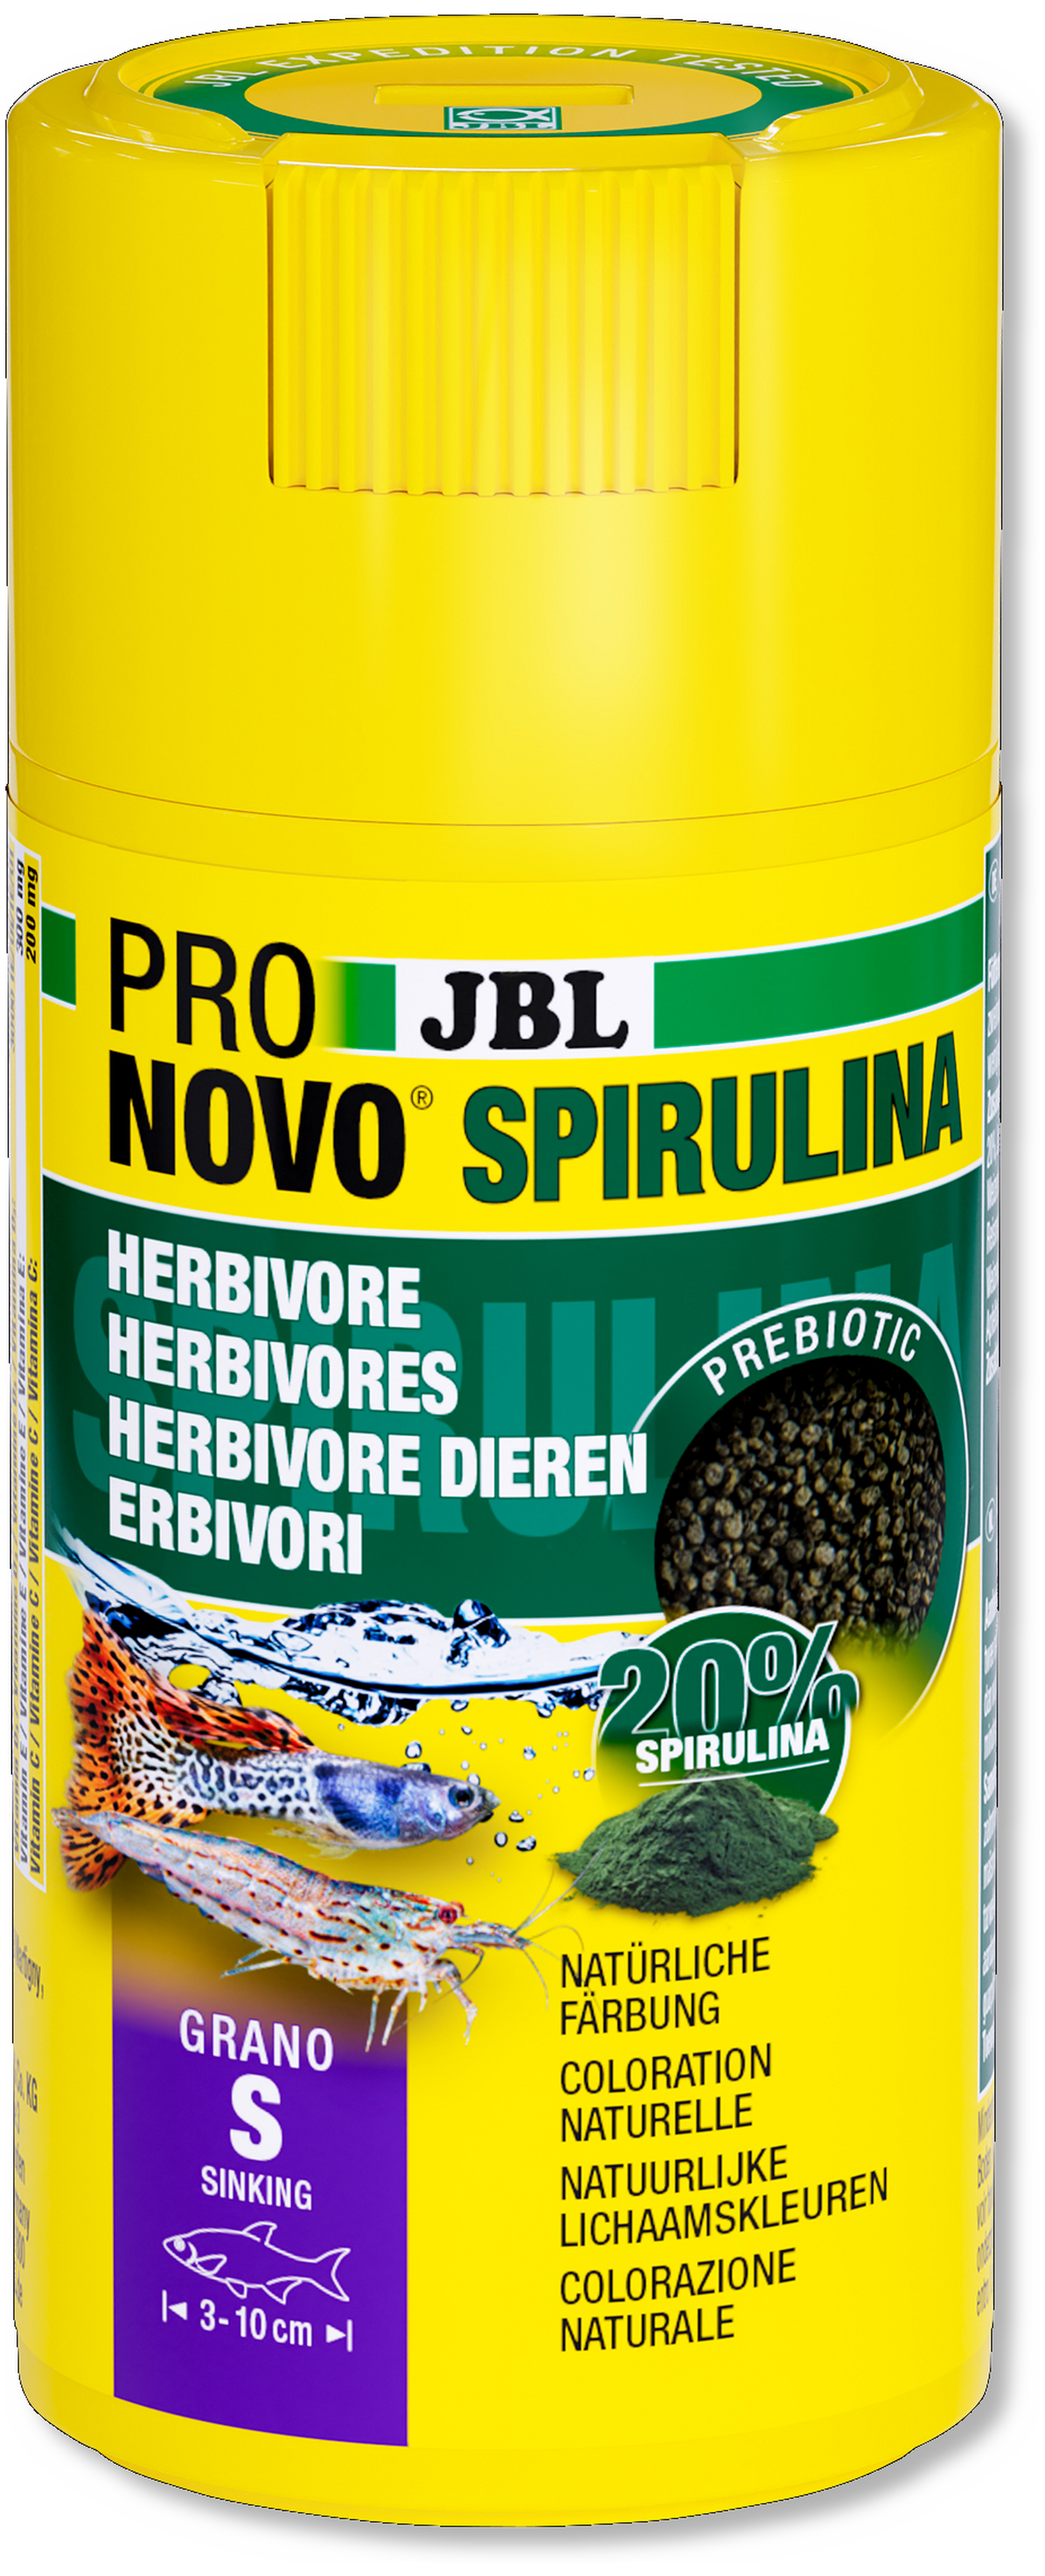 JBL ProNovo Spirulina Grano S, 100 ml, CLICK